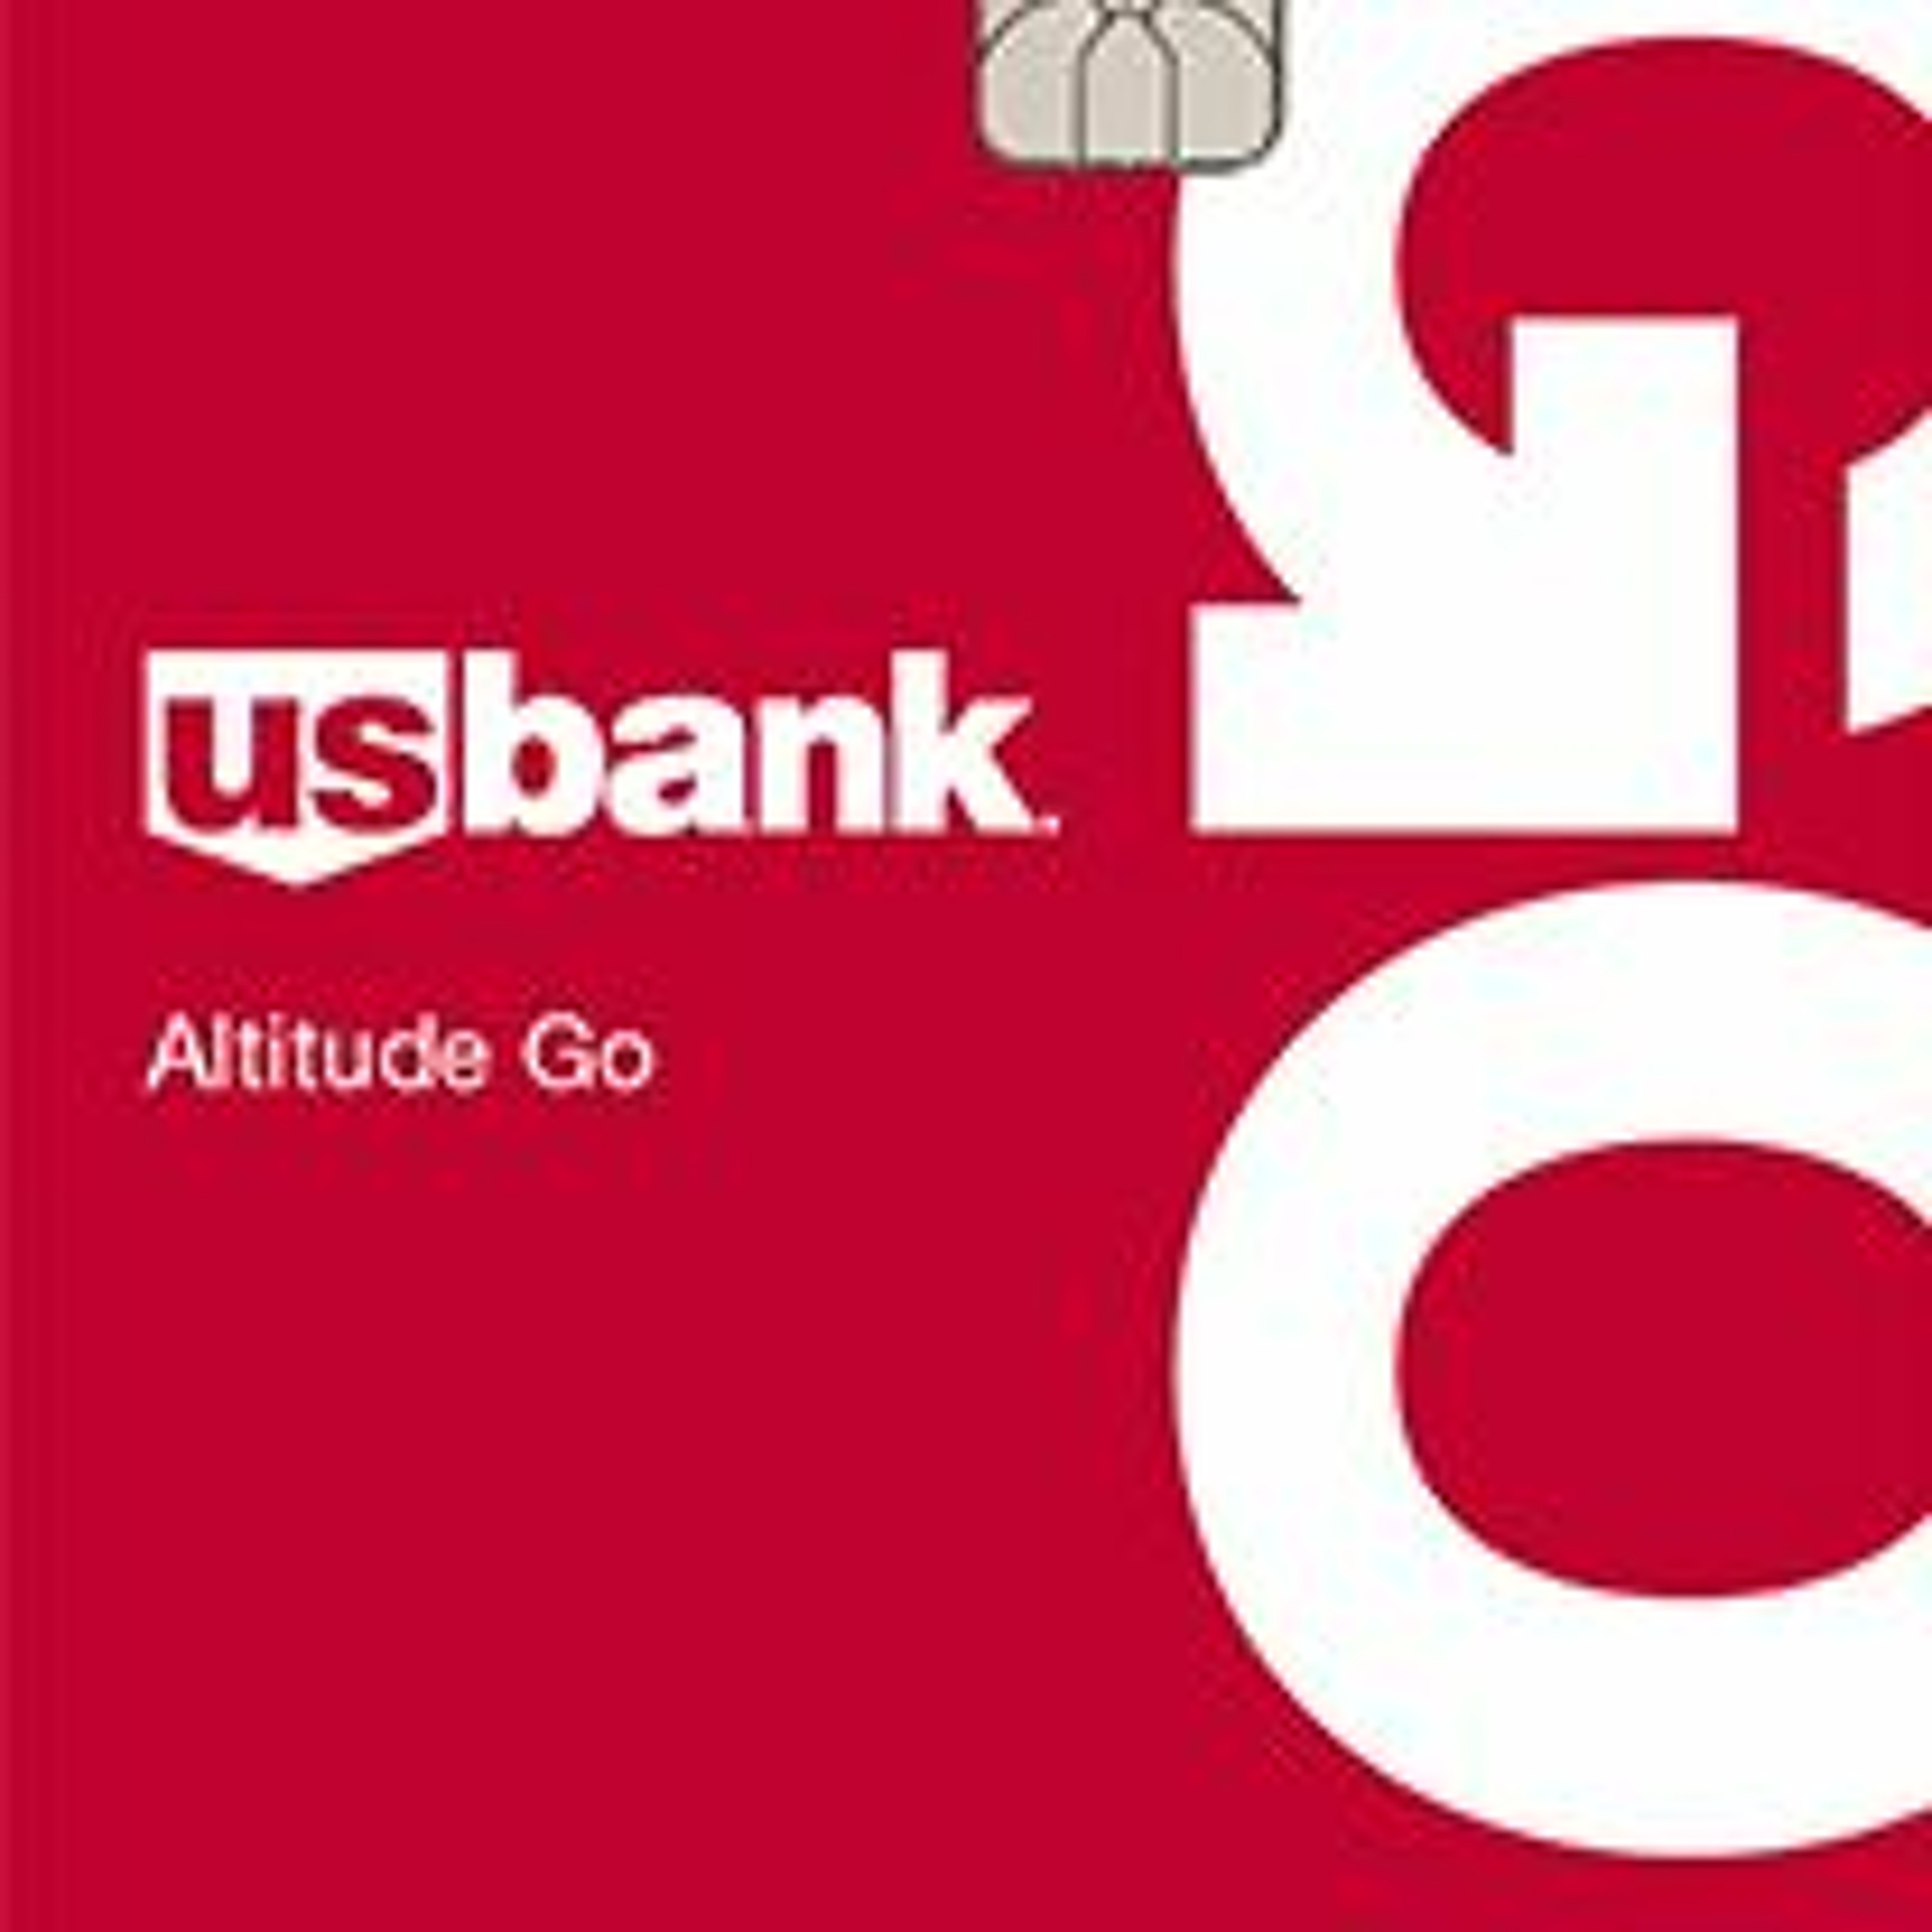 Episode 33: US Bank Altitude Go Card - A Second Take